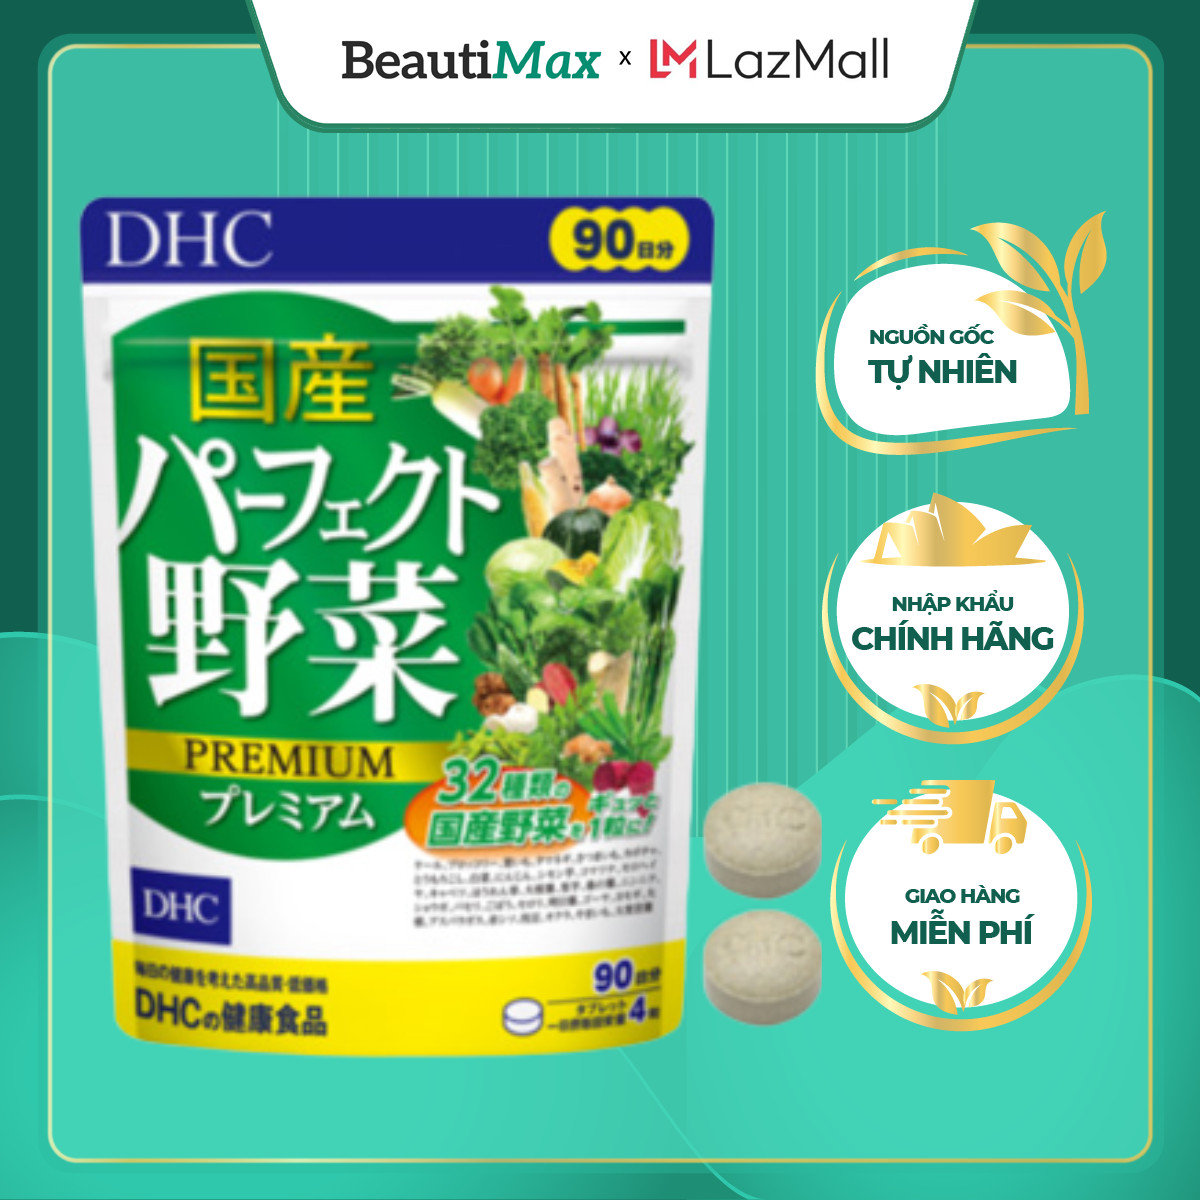 DHC Perfect Vegetable -Premium Japanese Harvest 90 Ngày - Bổ sung Rau Xanh